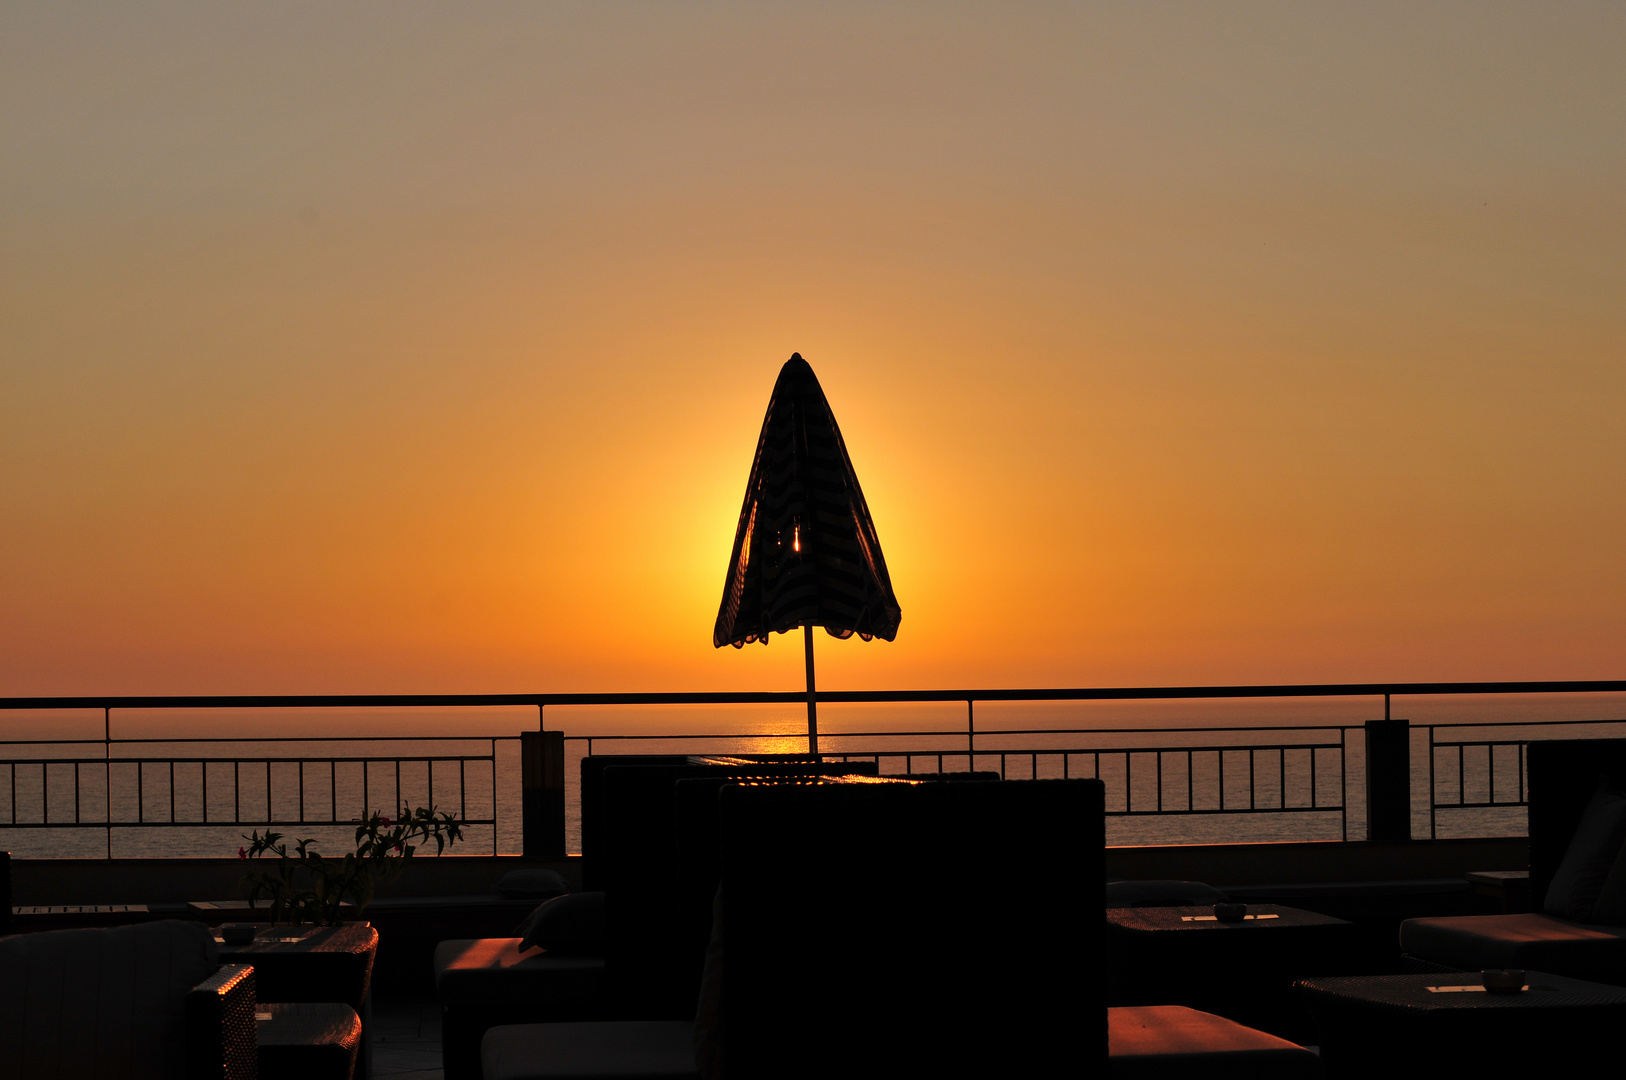 Sonnenuntergang auf Korfu